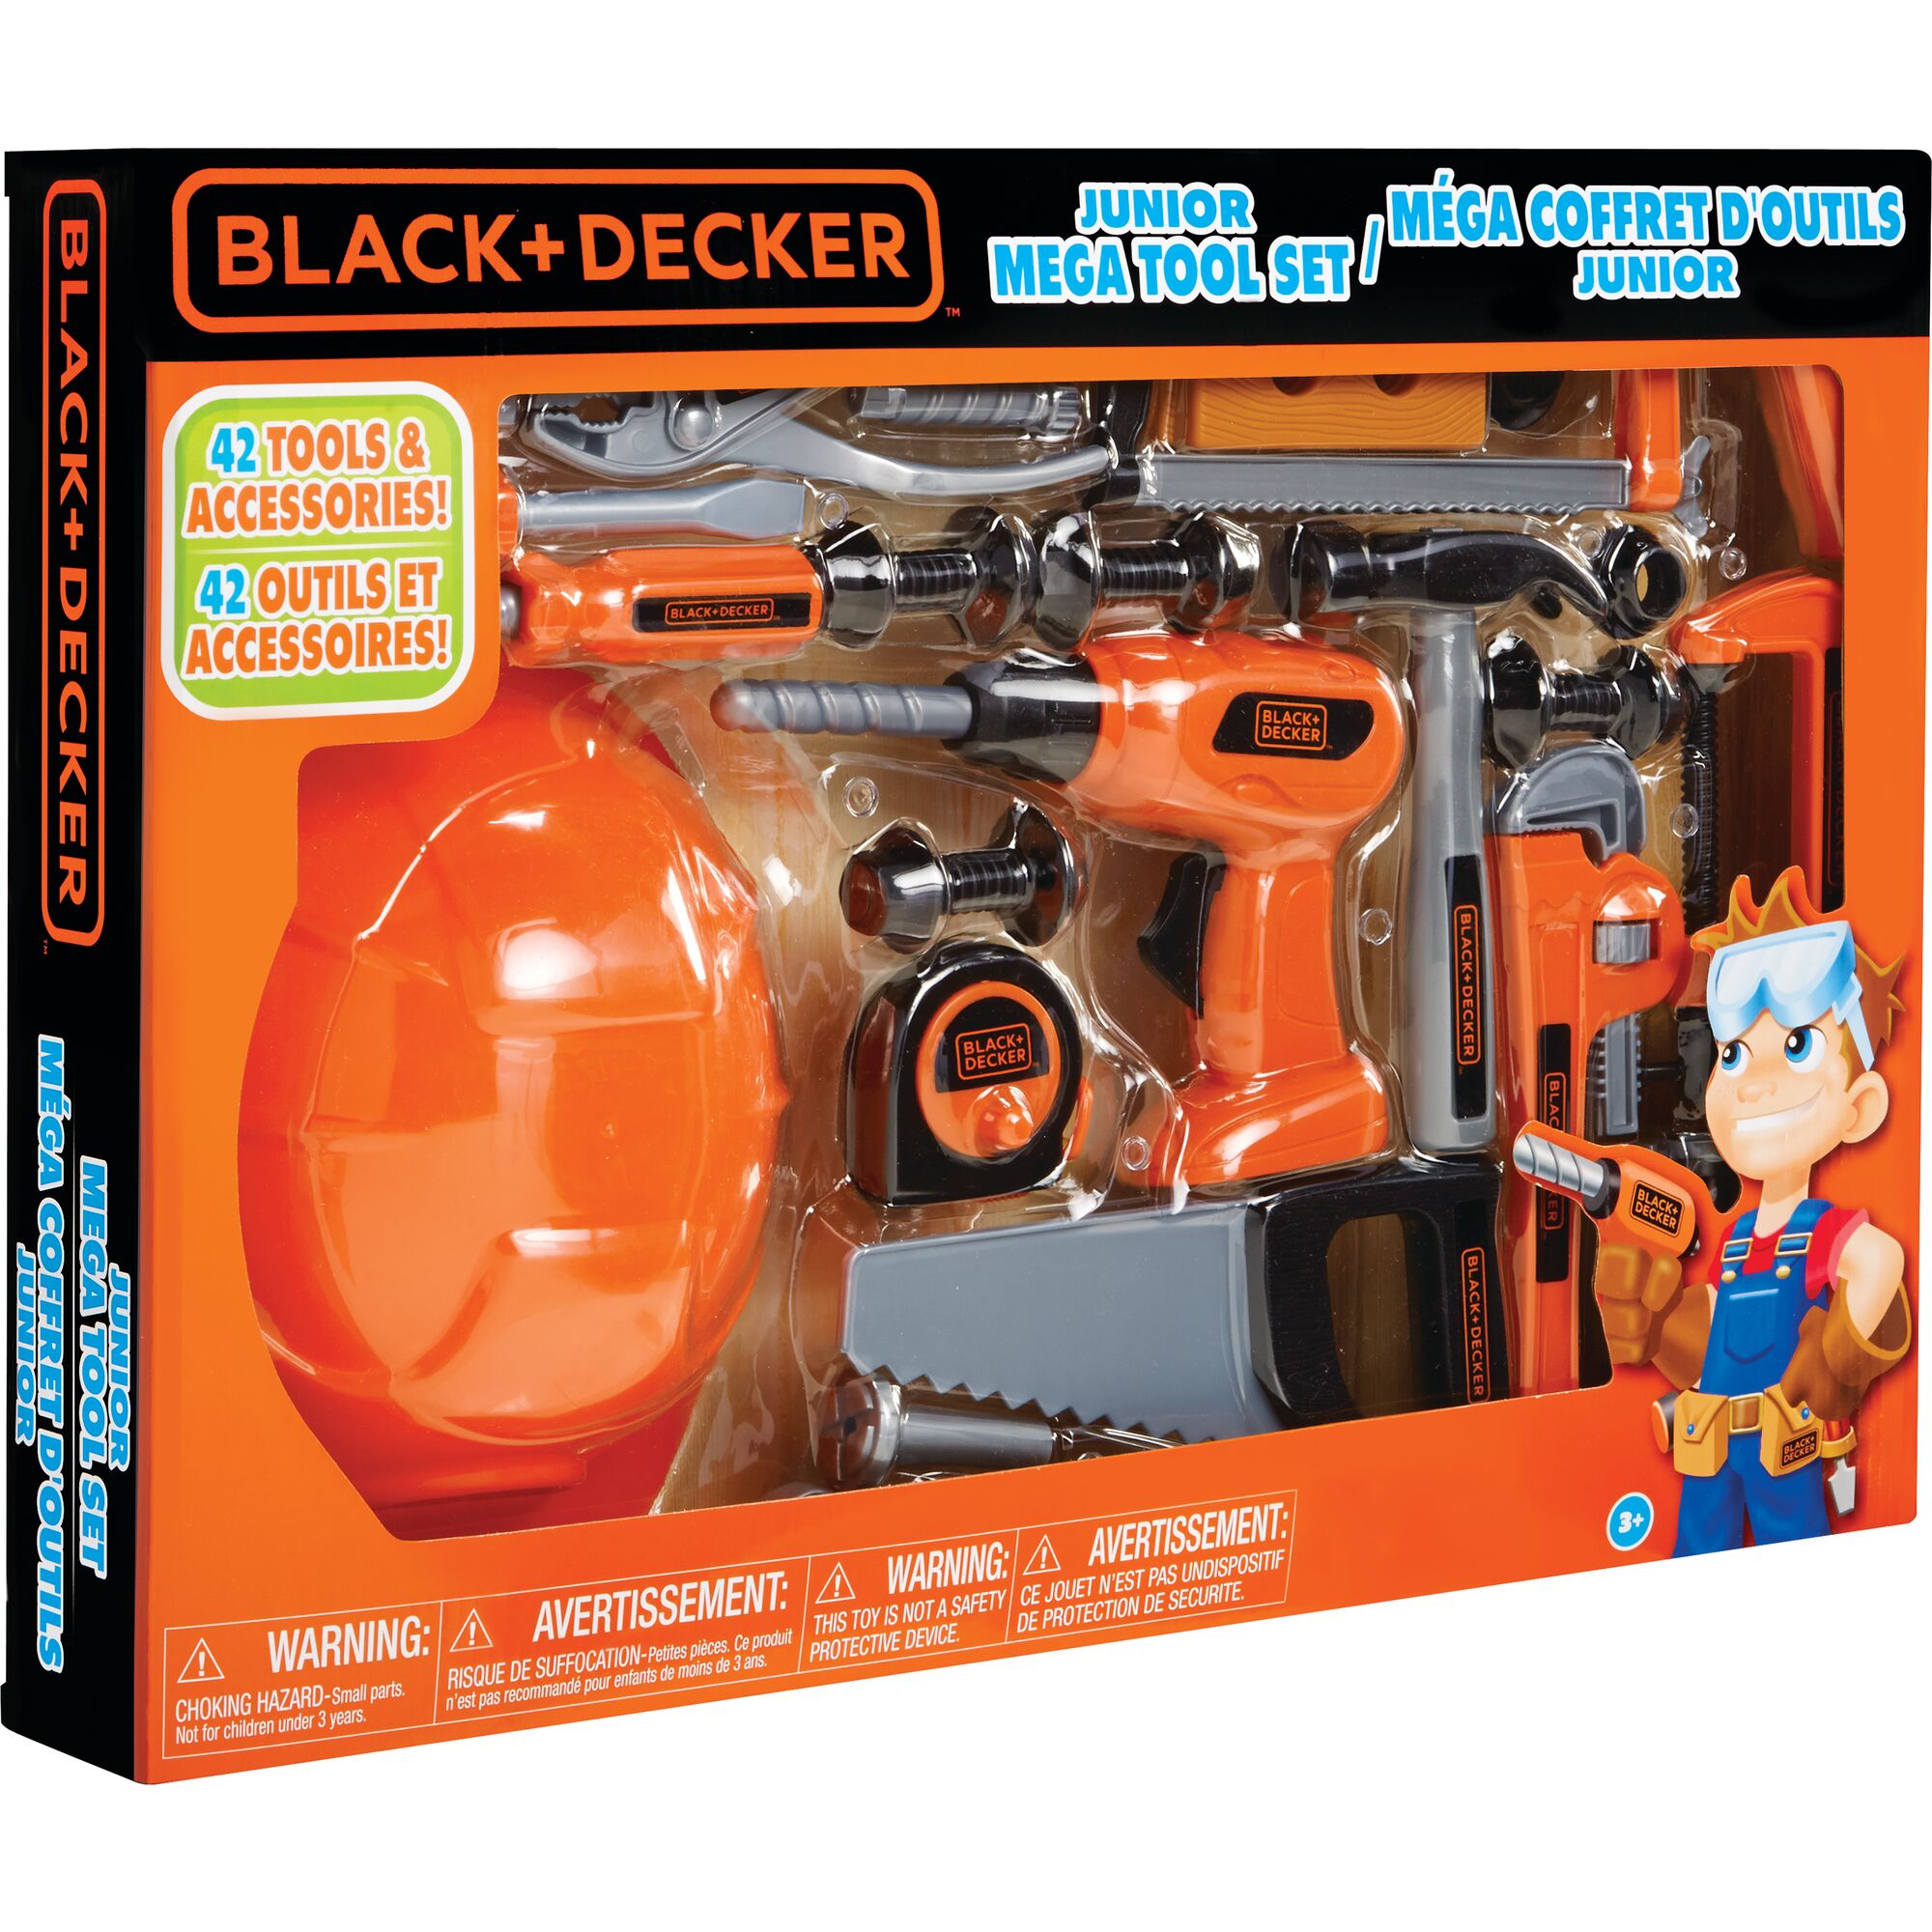 Black & Decker Wood Building Kit Accessories